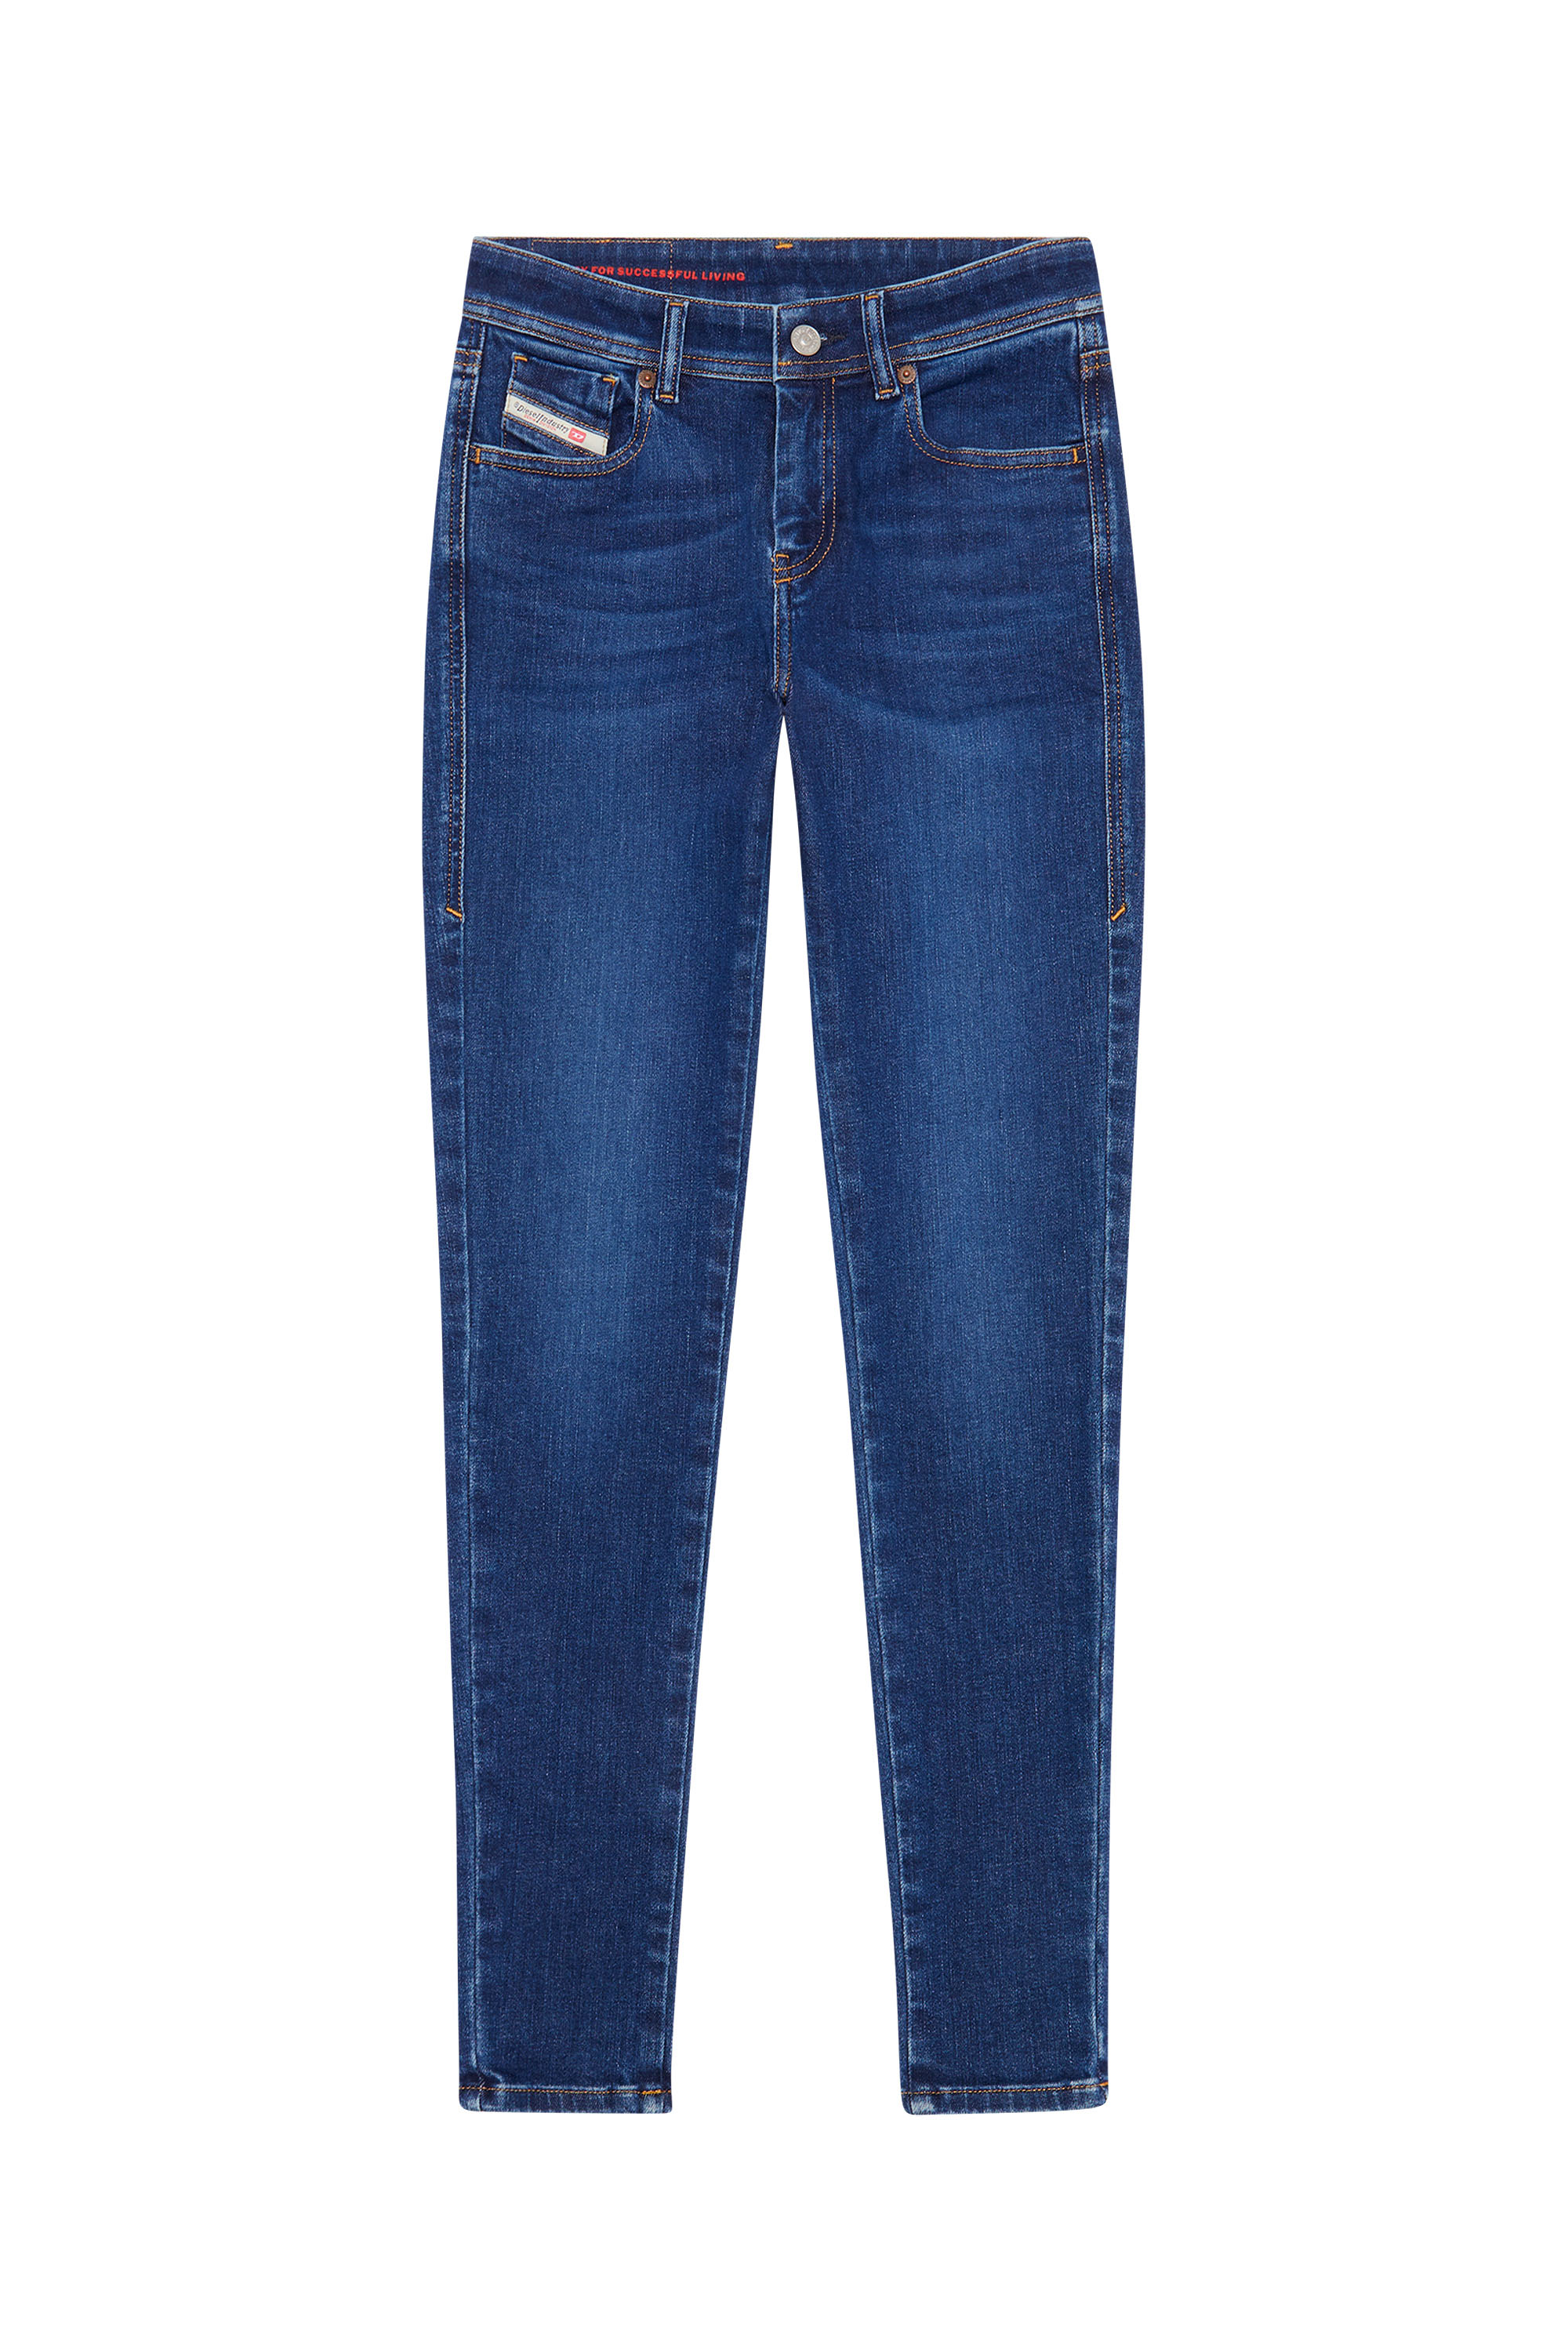 Super skinny Jeans 2017 Slandy 09C19, Dark Blue - Jeans